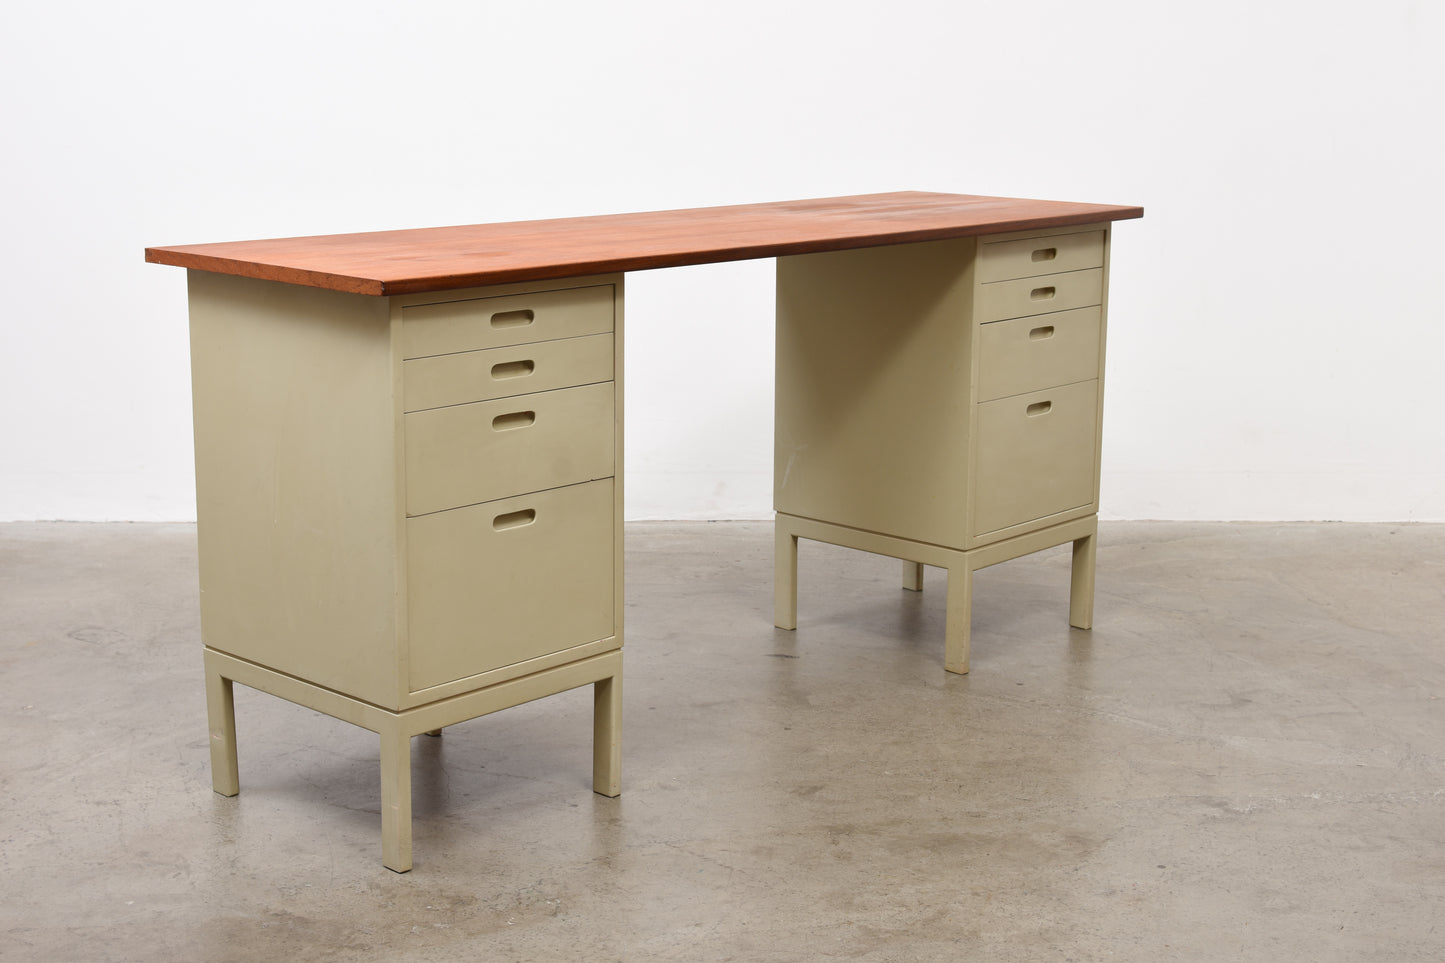 1960s Swedish twin pedestal desk